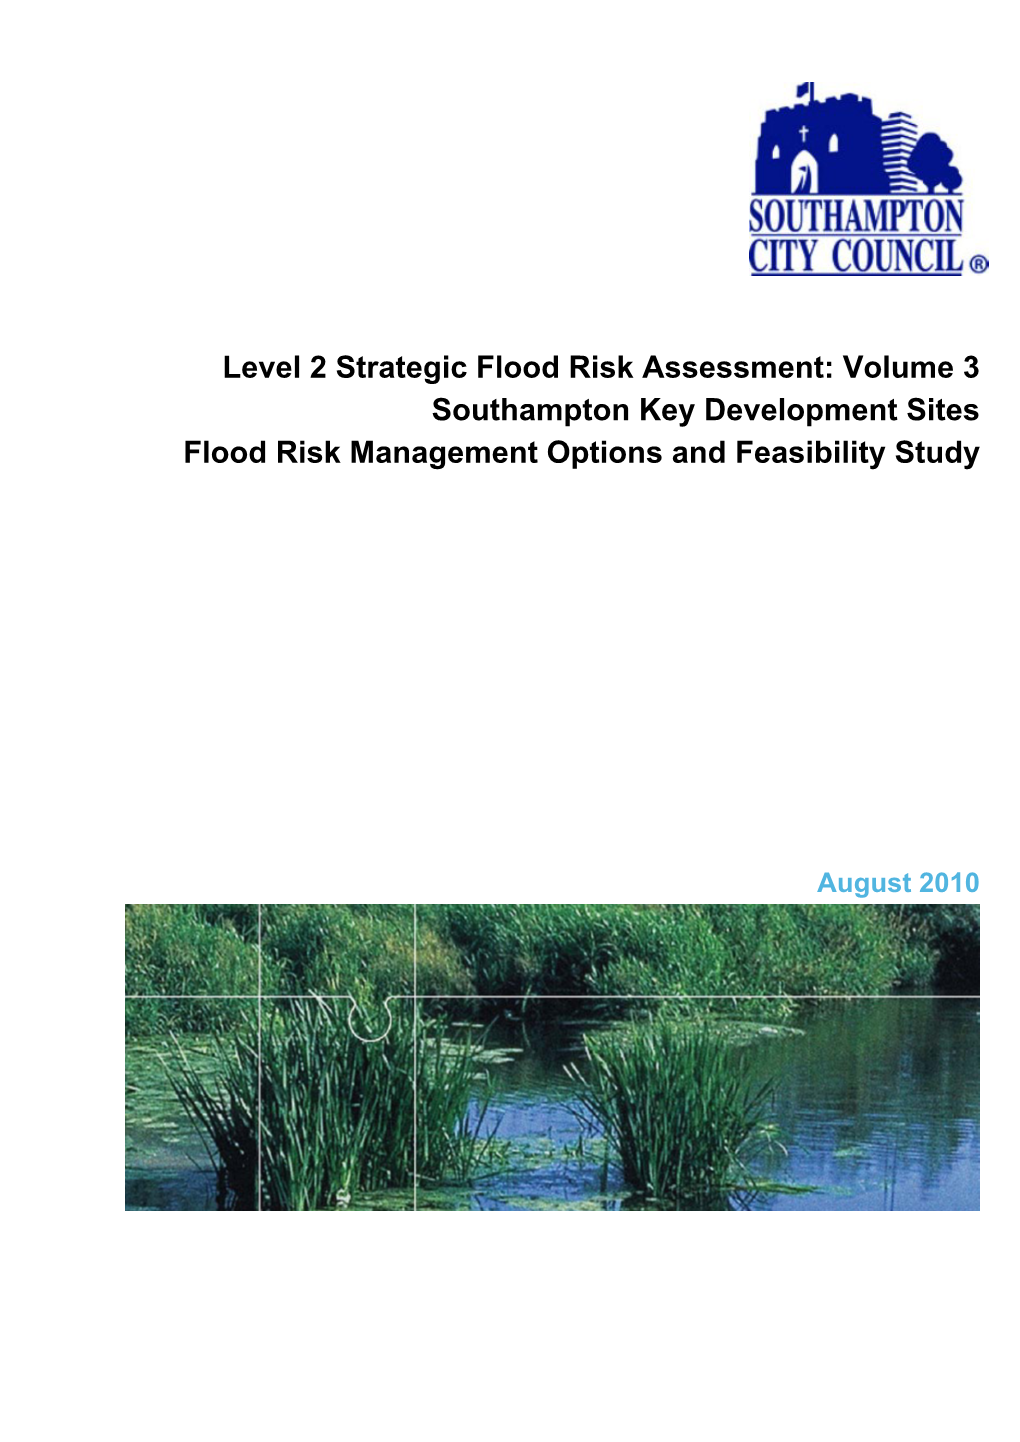 Level 2 Strategic Flood Risk Assessment: Volume 3 Southampton Key Development Sites Flood Risk Management Options and Feasibility Study